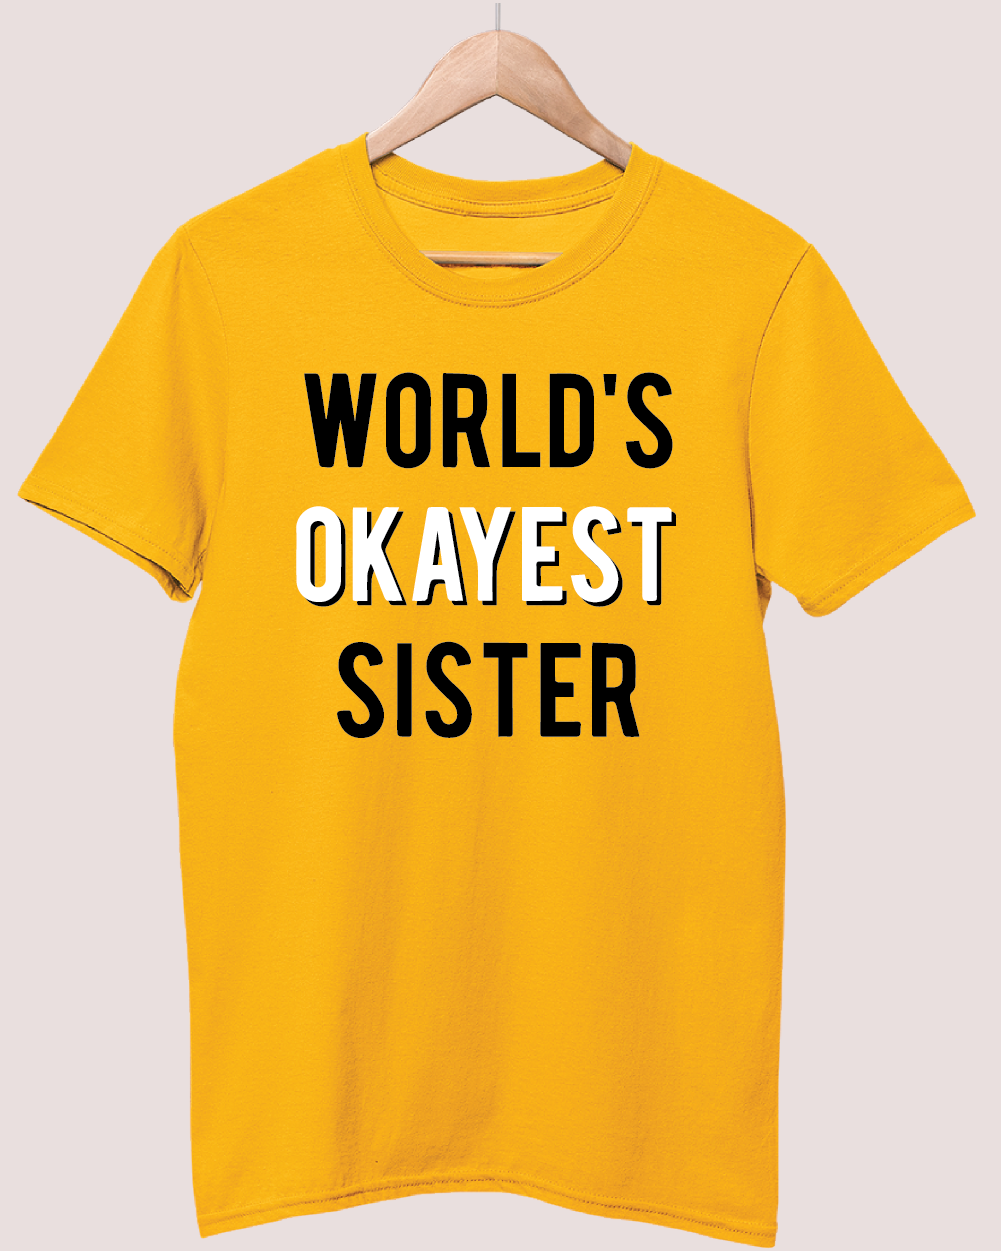 World's okayest sister t-shirt